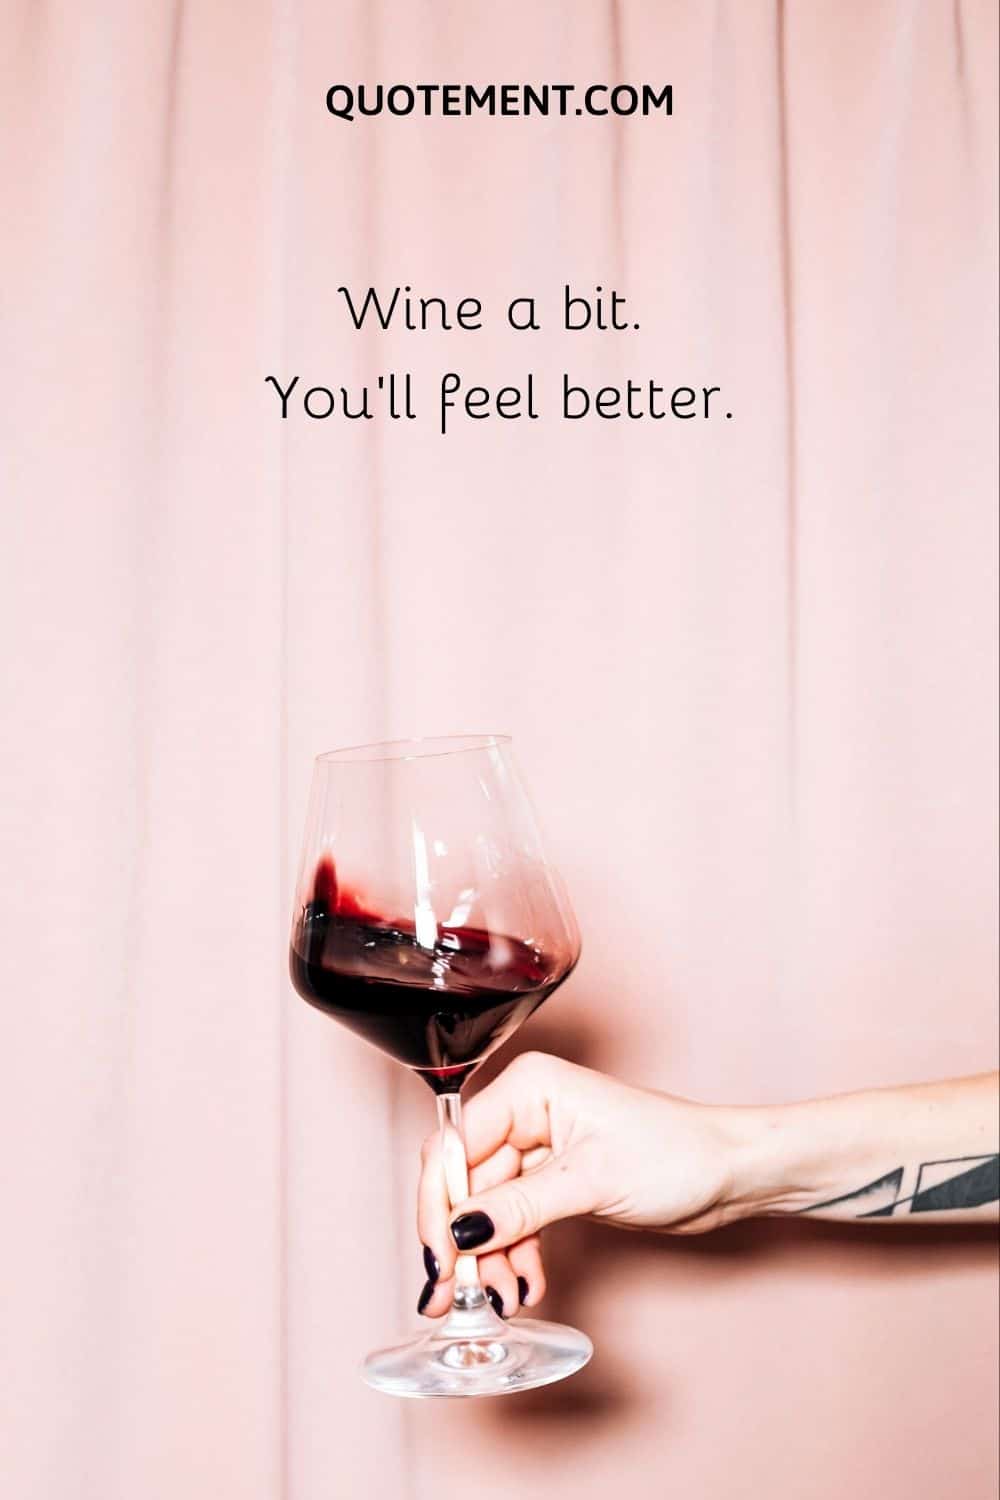 Wine a bit. You’ll feel better